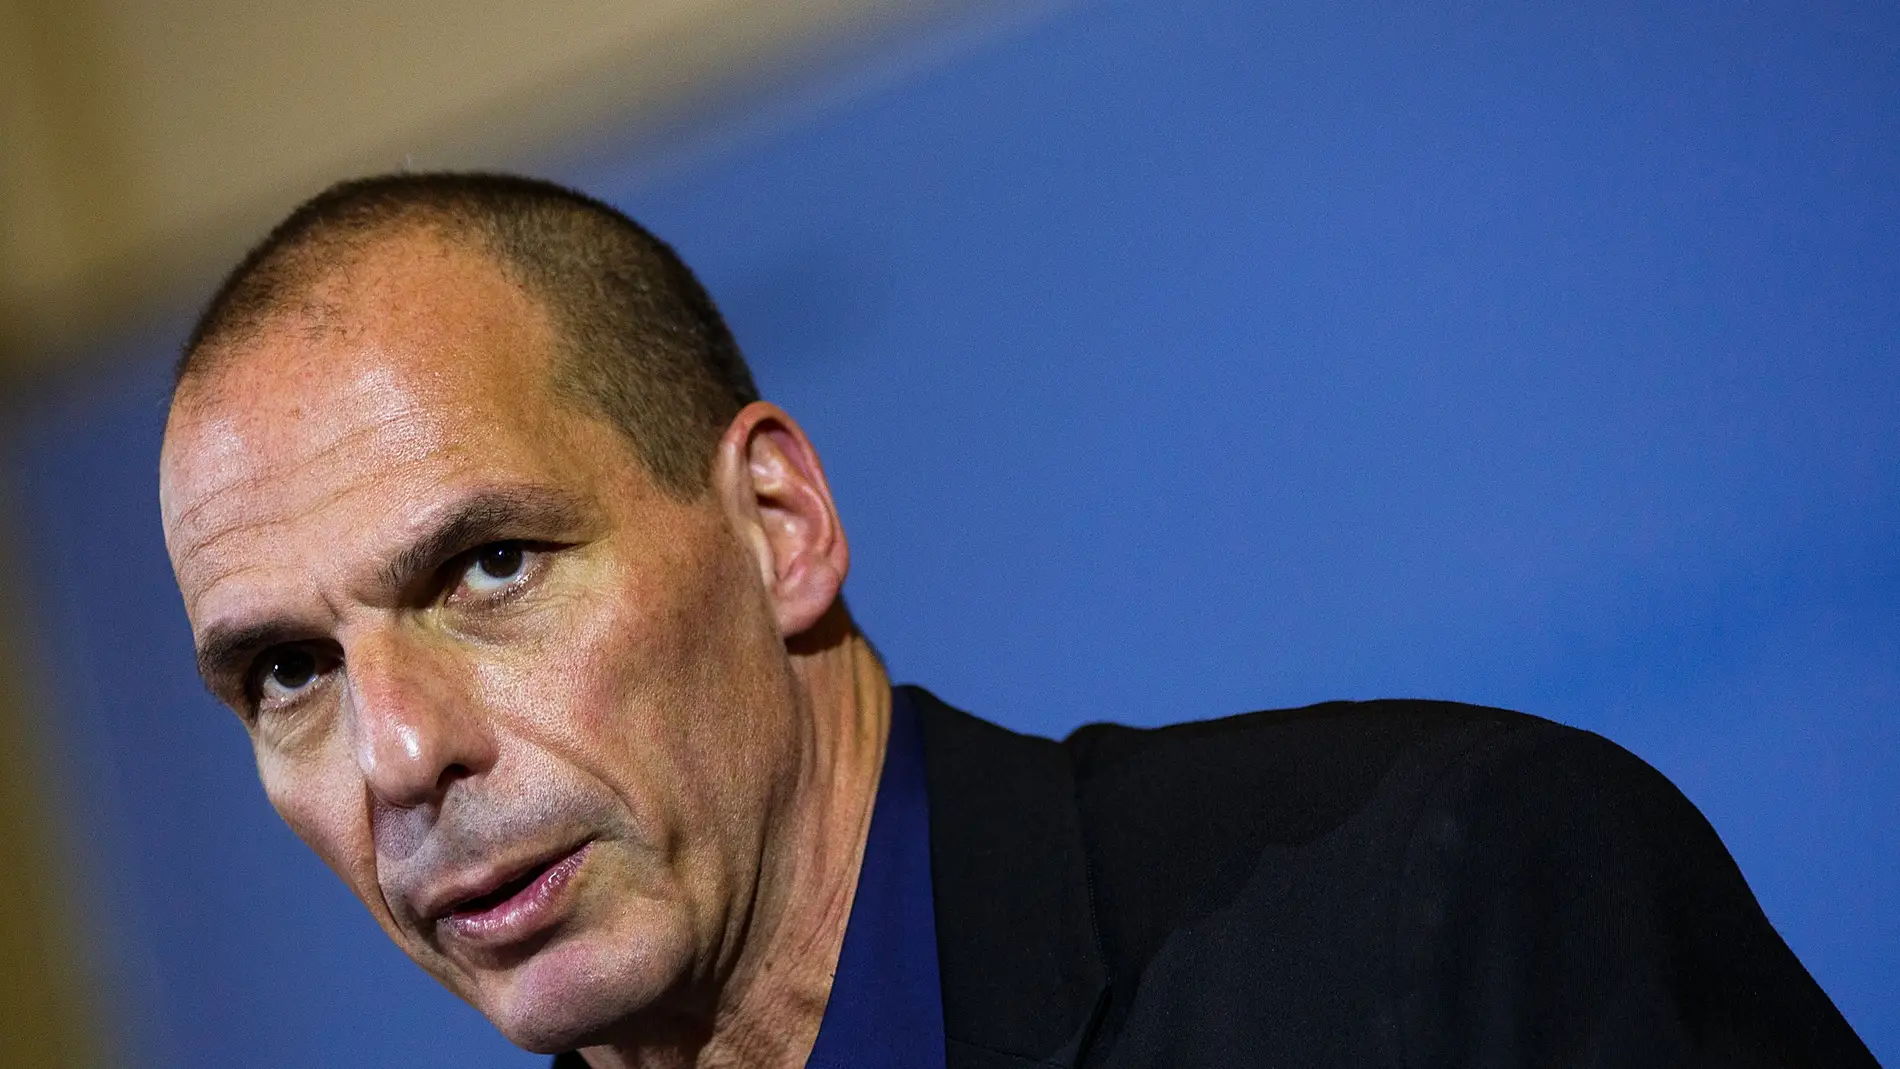 Varoufakis, ministro de Finanzas griego